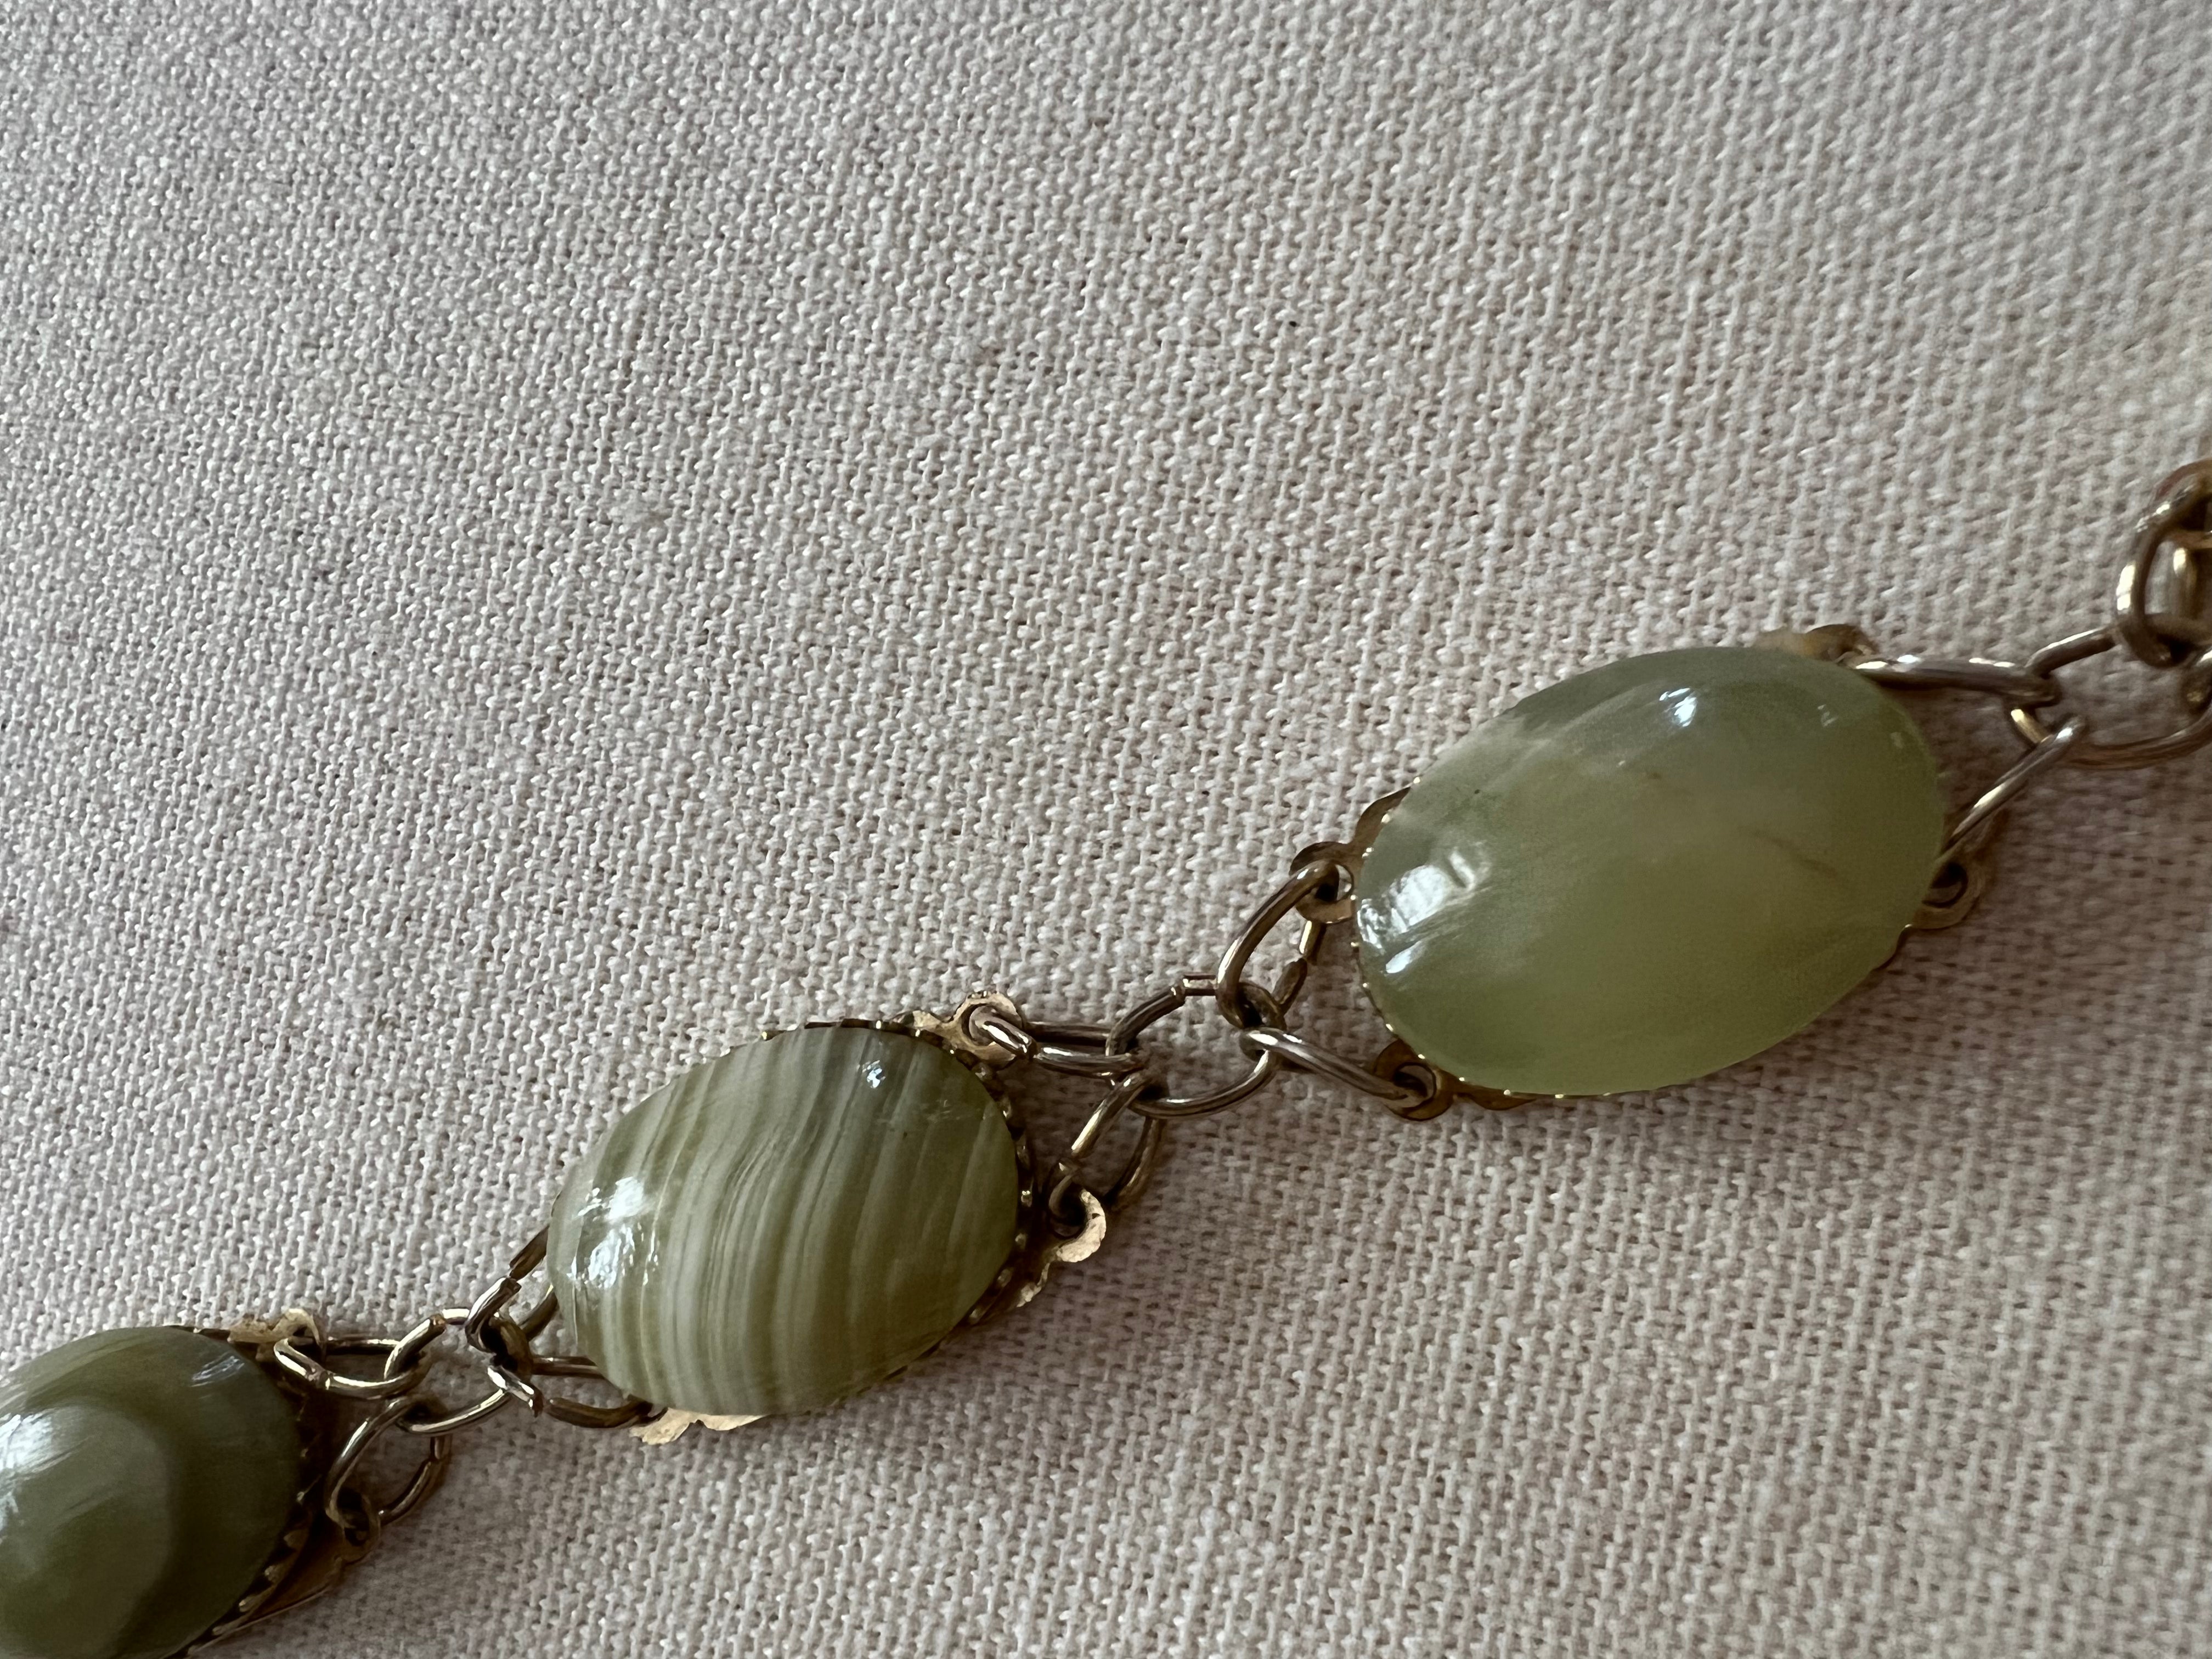 Vintage Gold Green Stone Bracelet